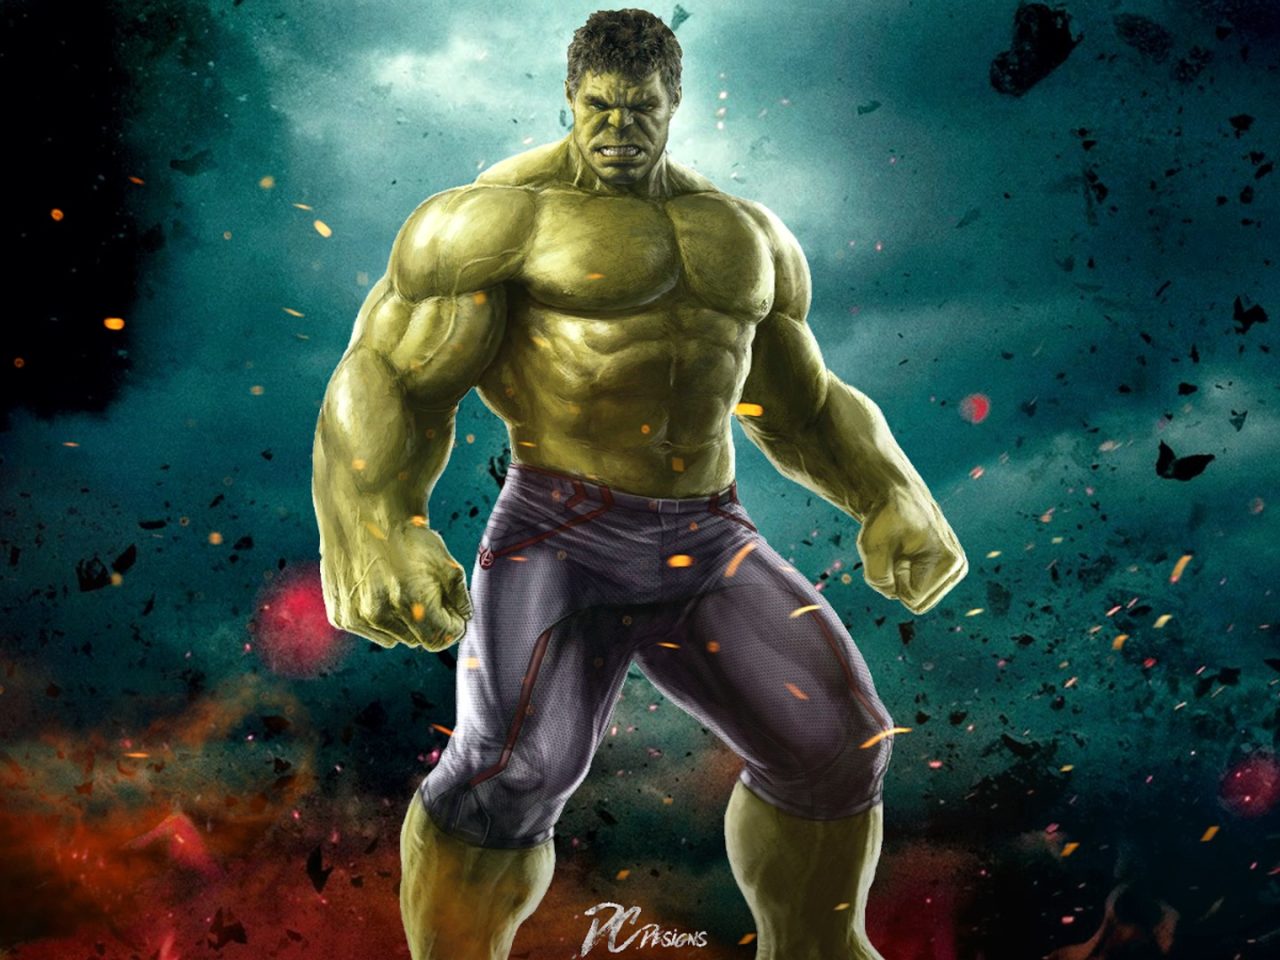 Hulk Avengers Age Of Ultron Muscle Fists HD Wallpaper For Desktop High Definition 1920x1080, Wallpaper13.com